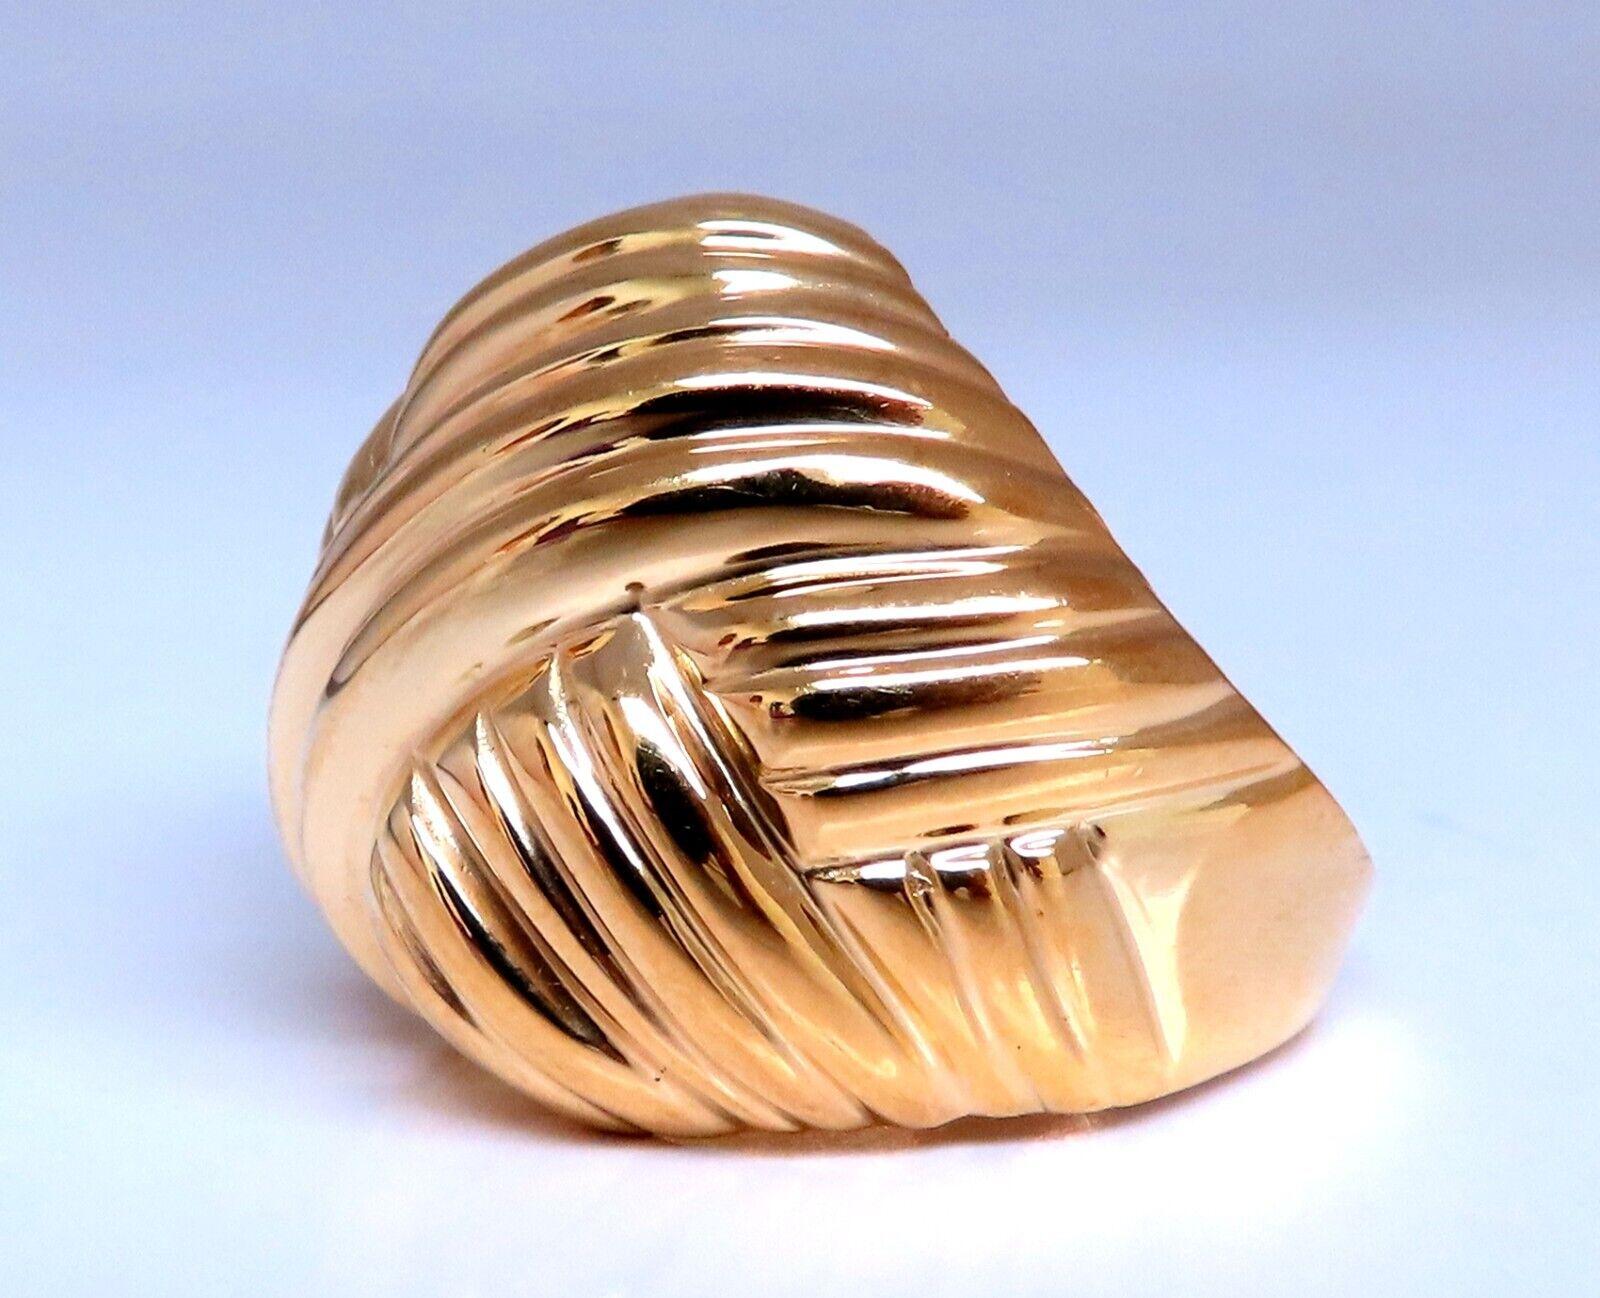 Cross Hatch Gold Ring.

Cross Hatch Ribbed Thread Deco 

21mm wide

6.6 mm depth

14 karat yellow gold 9 grams

Size 6